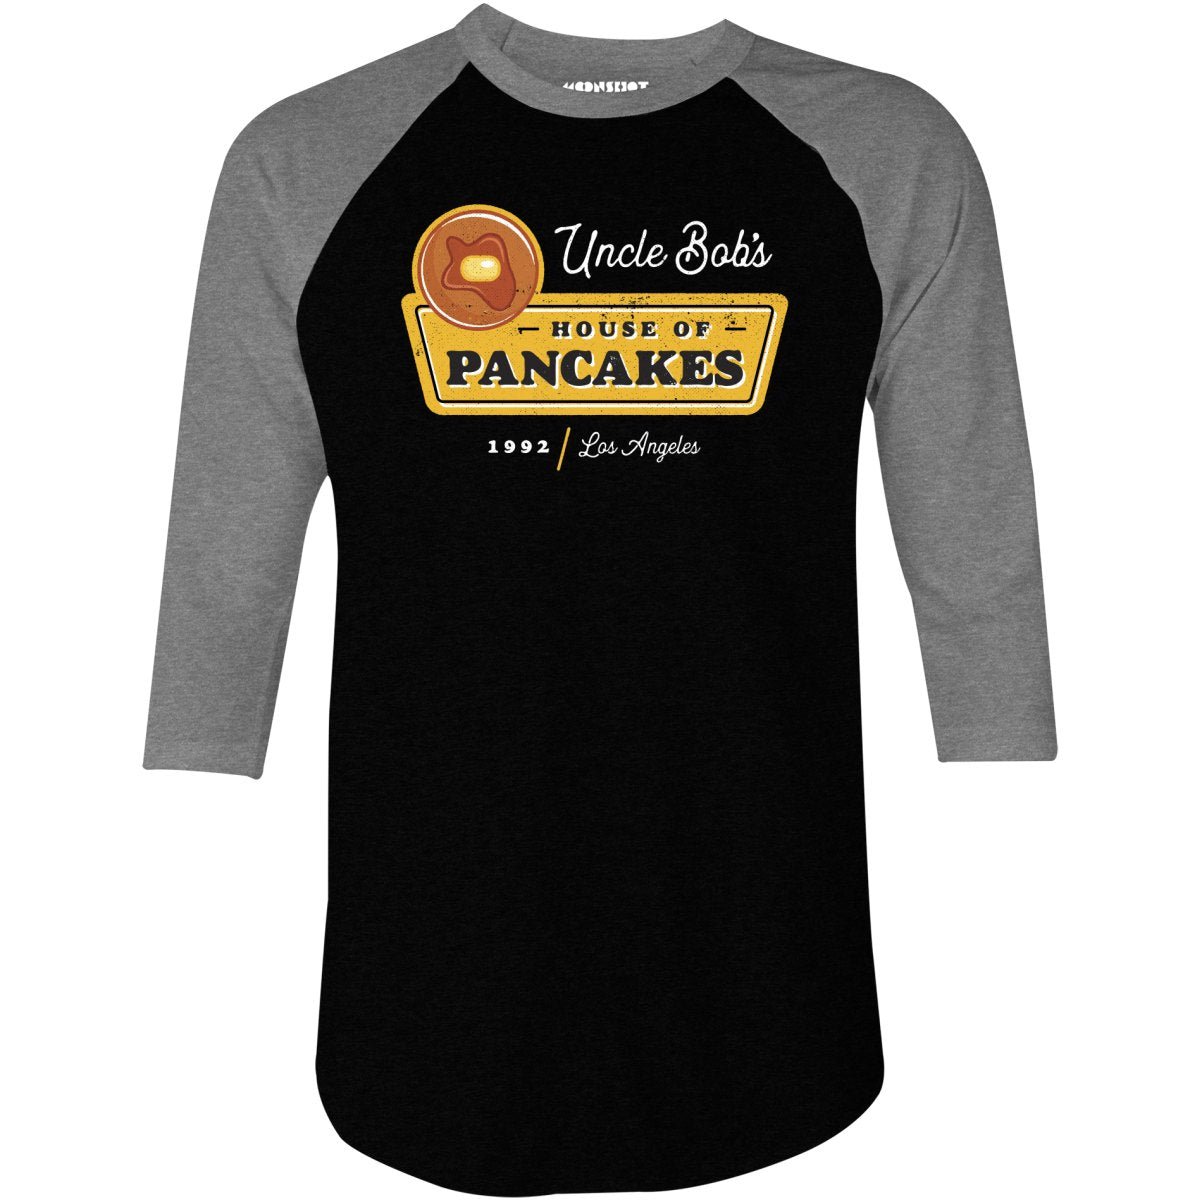 Uncle Bob's House of Pancakes - Reservoir Dogs - 3/4 Sleeve Raglan T-Shirt